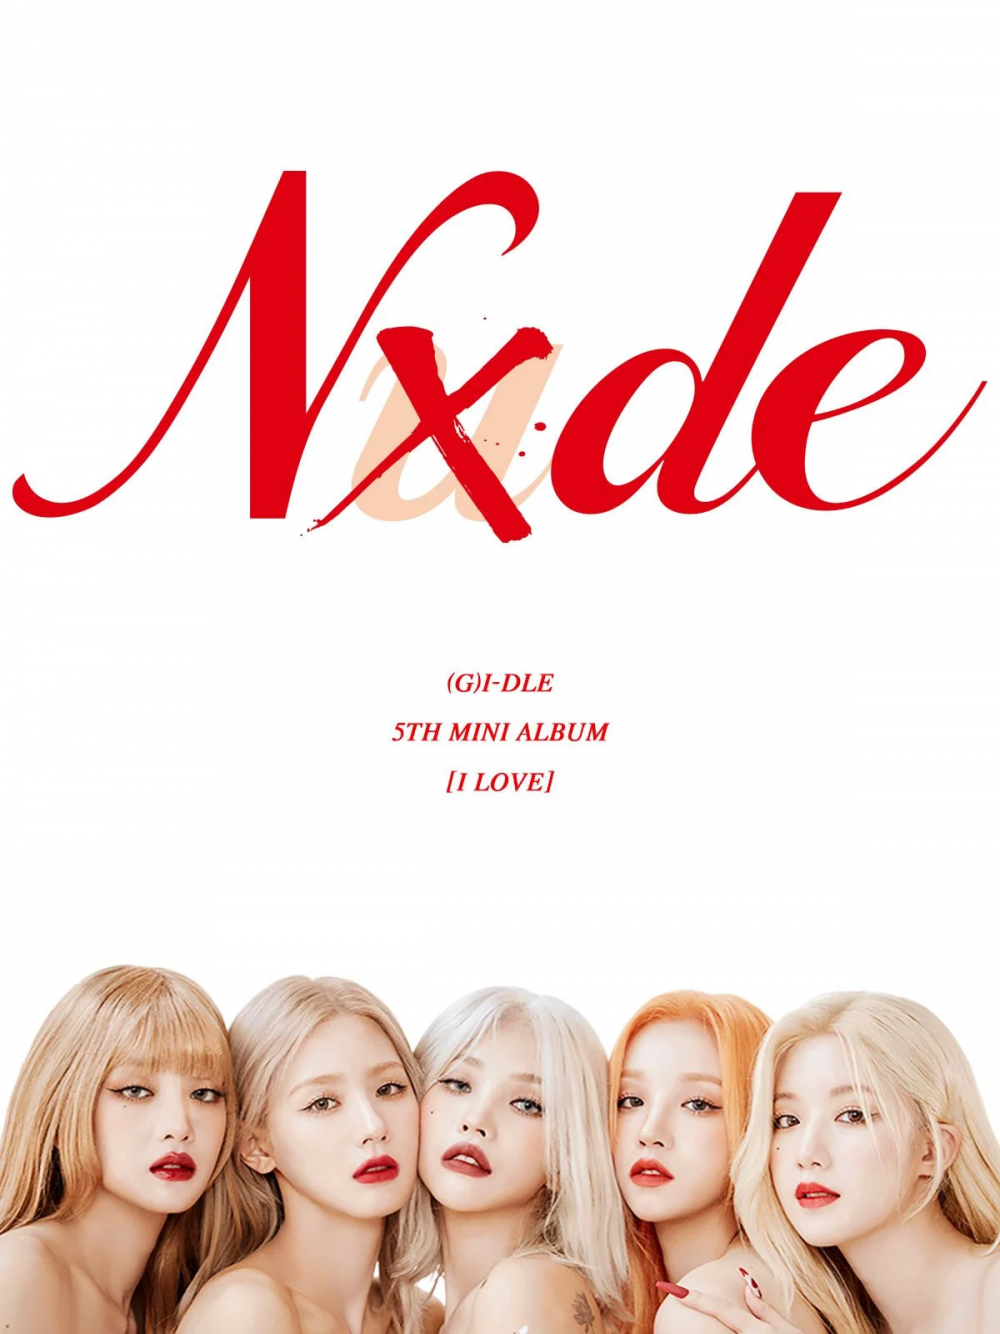 [Камбэк] (G)I-DLE мини-альбом "I Love": спешл-клип "X-FILE"